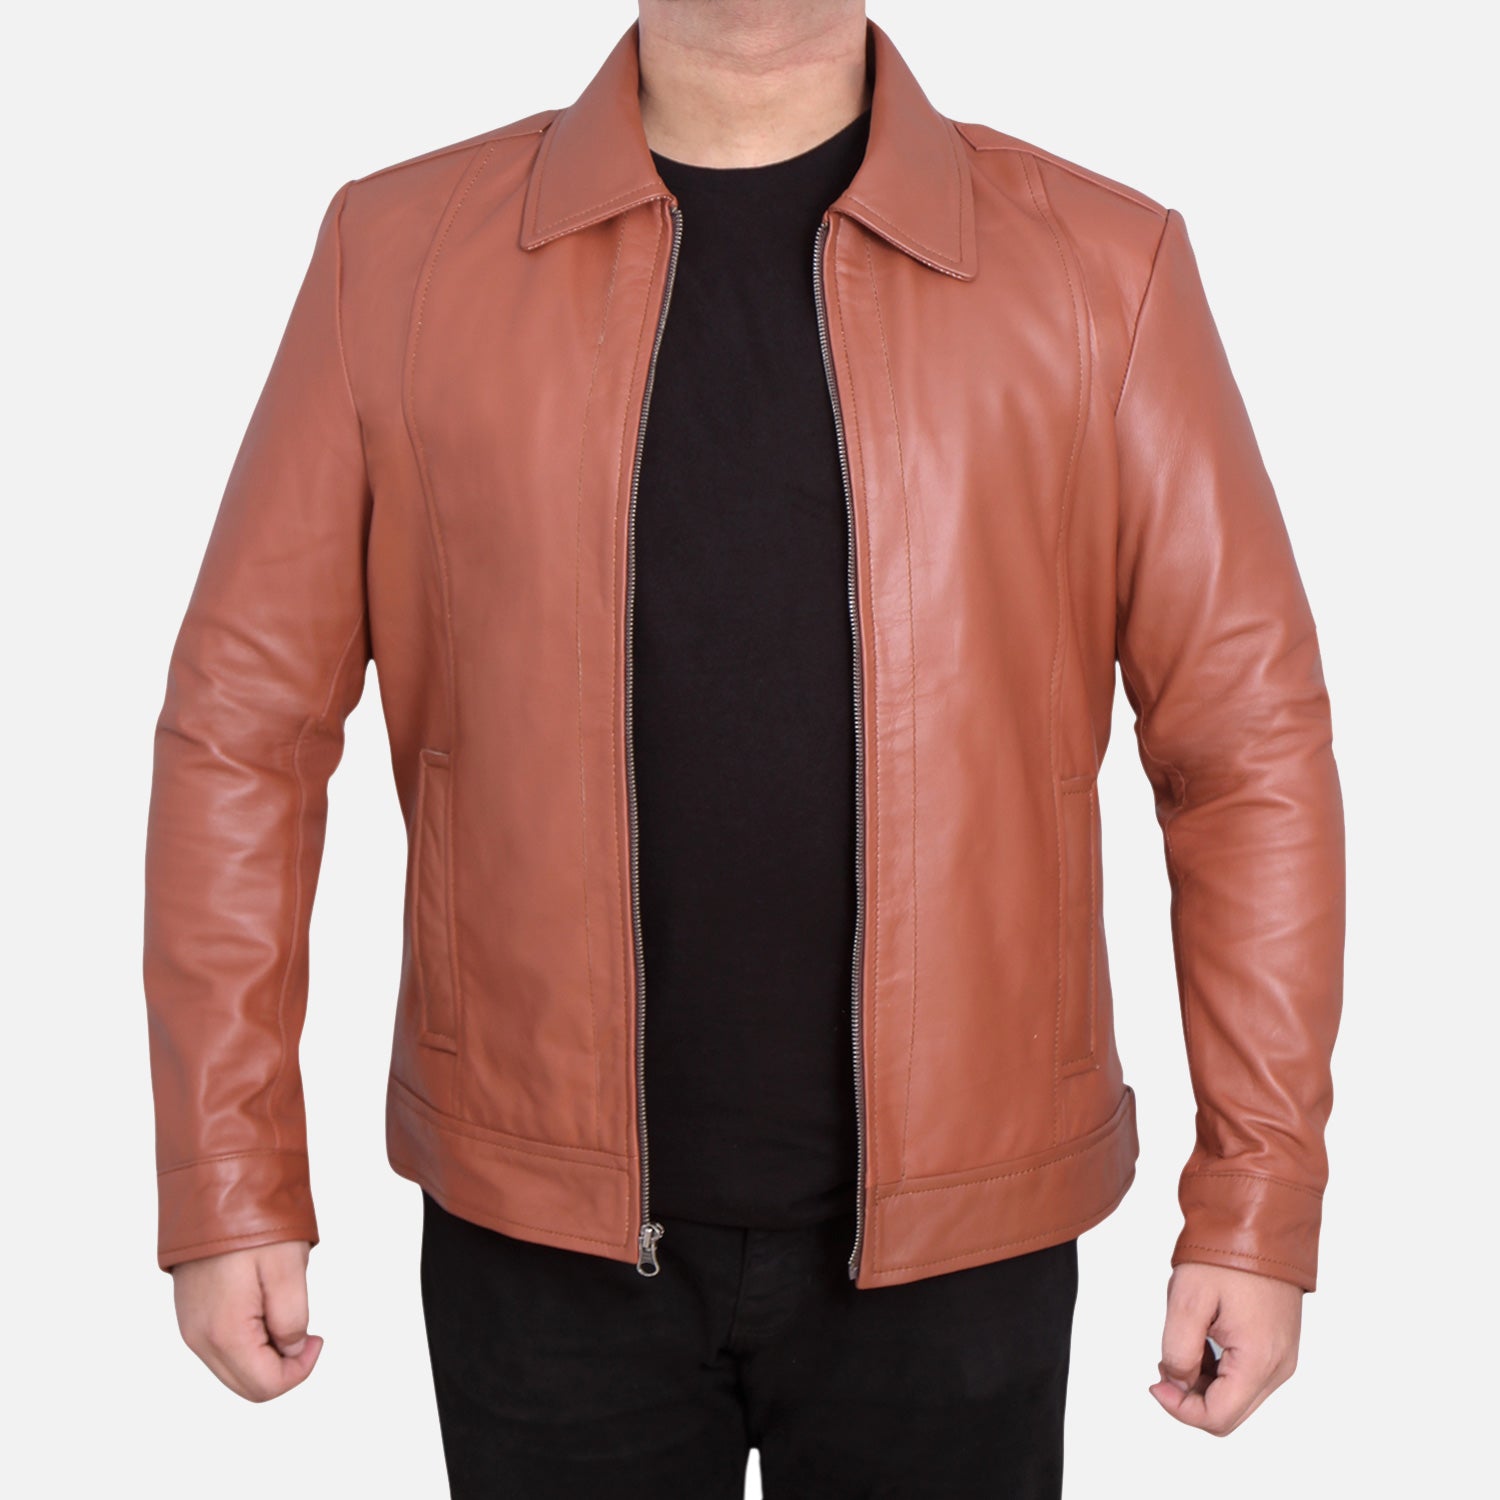 John Wick Tan Leather Jacket